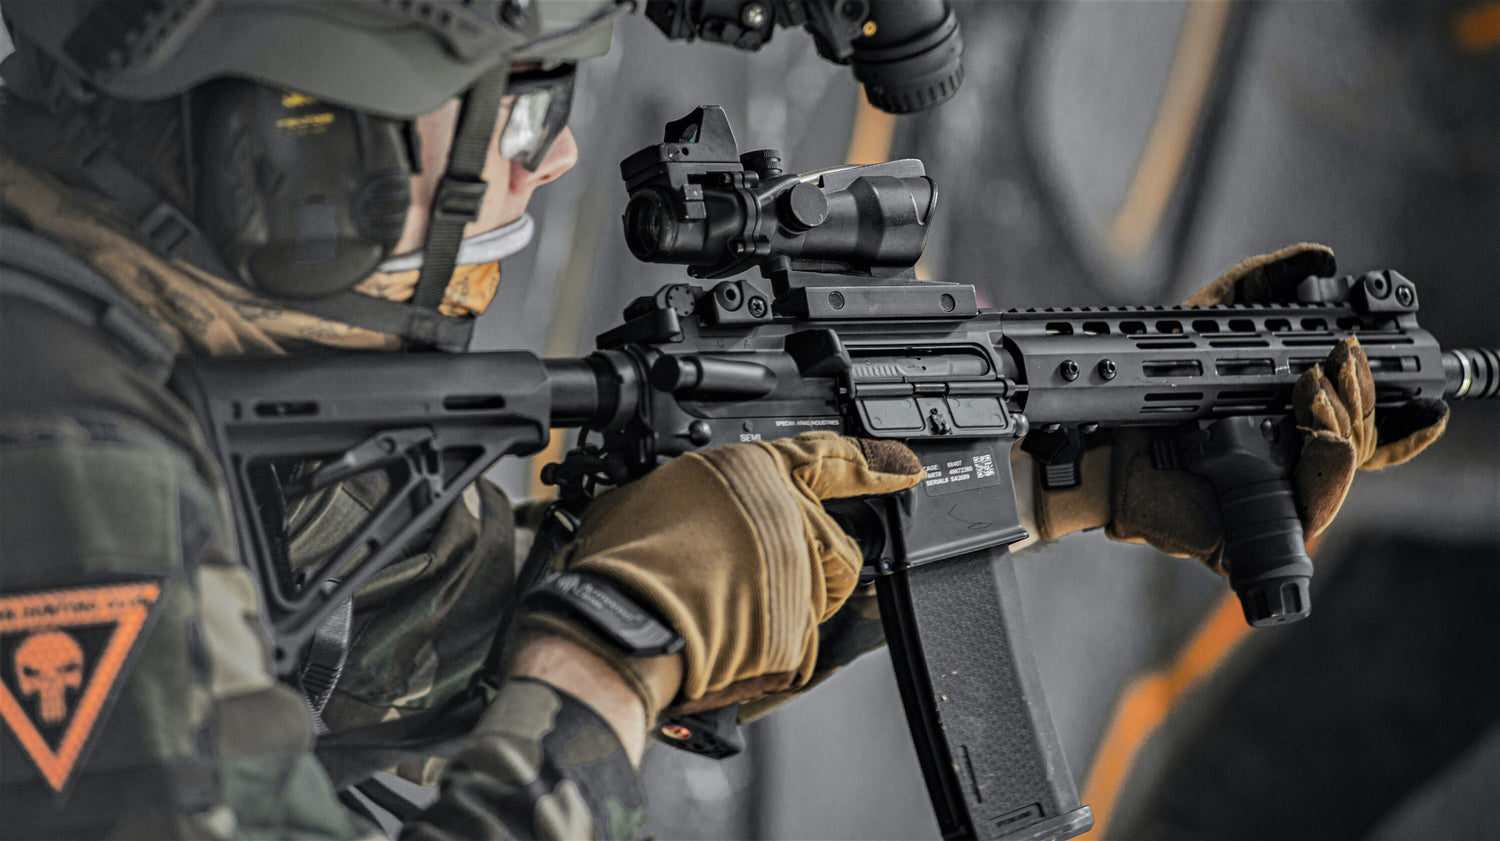  bbtac bt59 airsoft sniper rifle bolt action type 96 airsoft  gun with 3x rifle scope and aluminum bipod(Airsoft Gun) : Sports & Outdoors